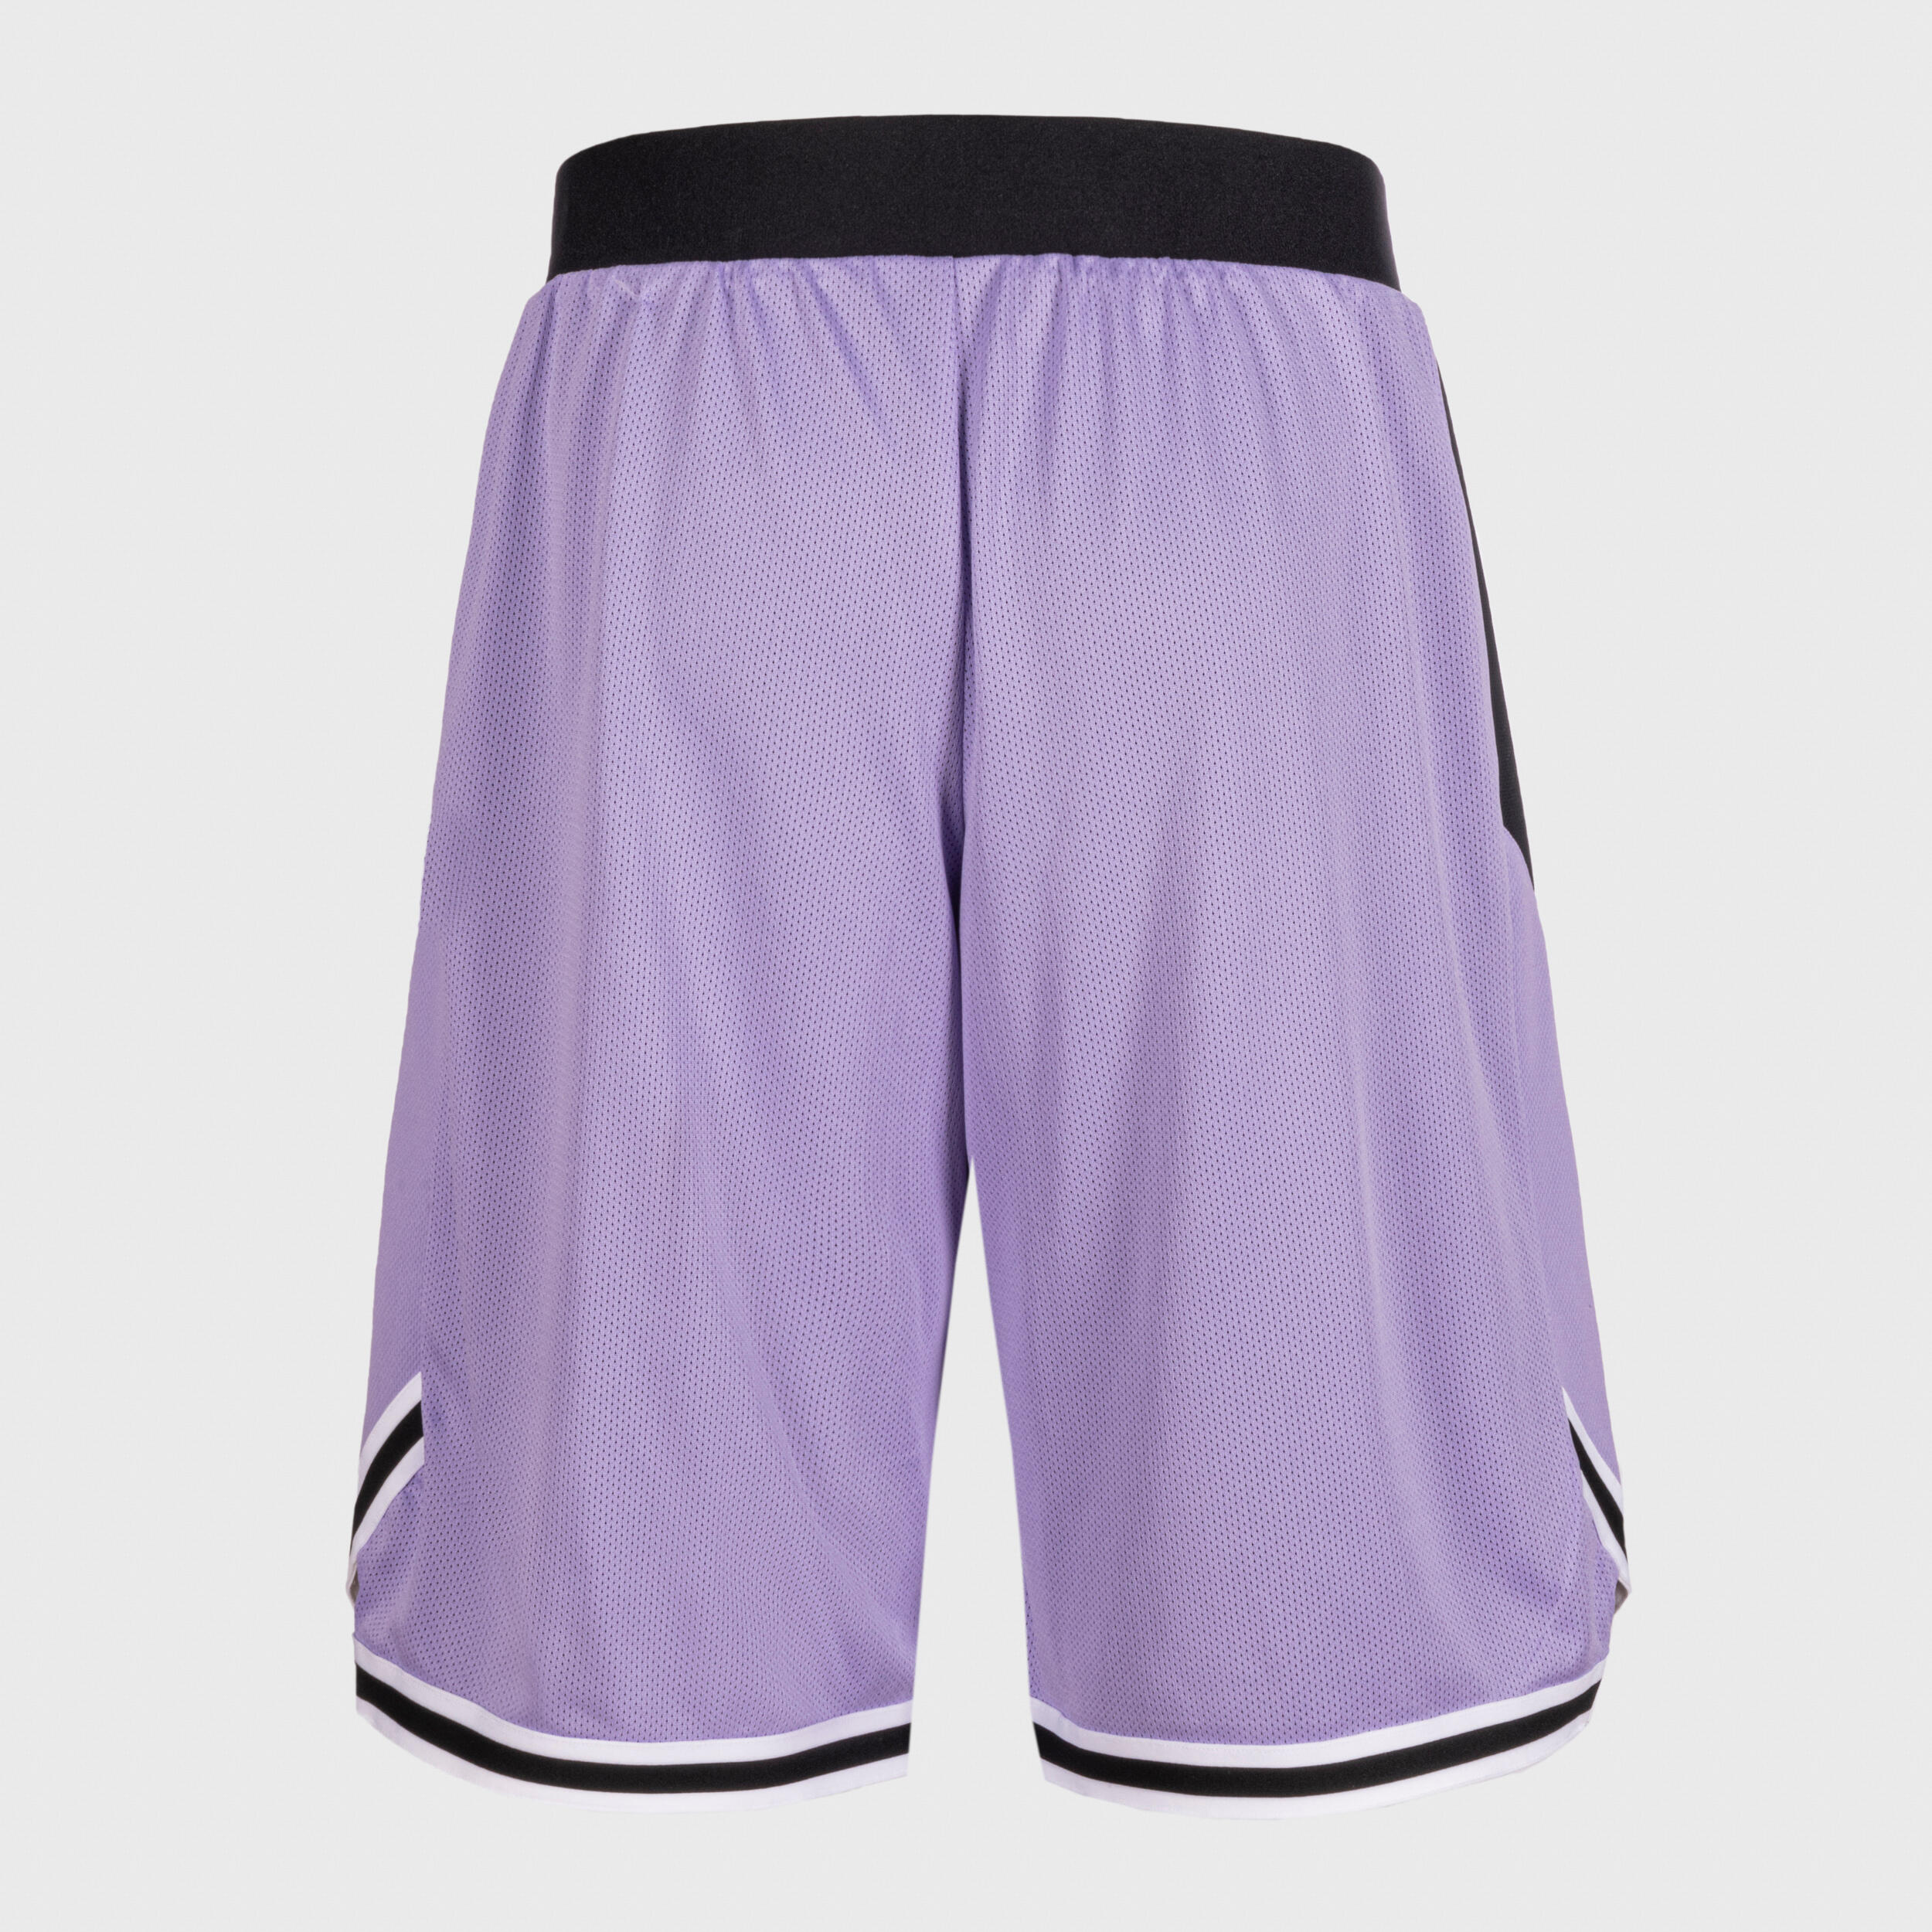 Men's/Women's Reversible Basketball Shorts SH500R - Purple/Lilac 6/11